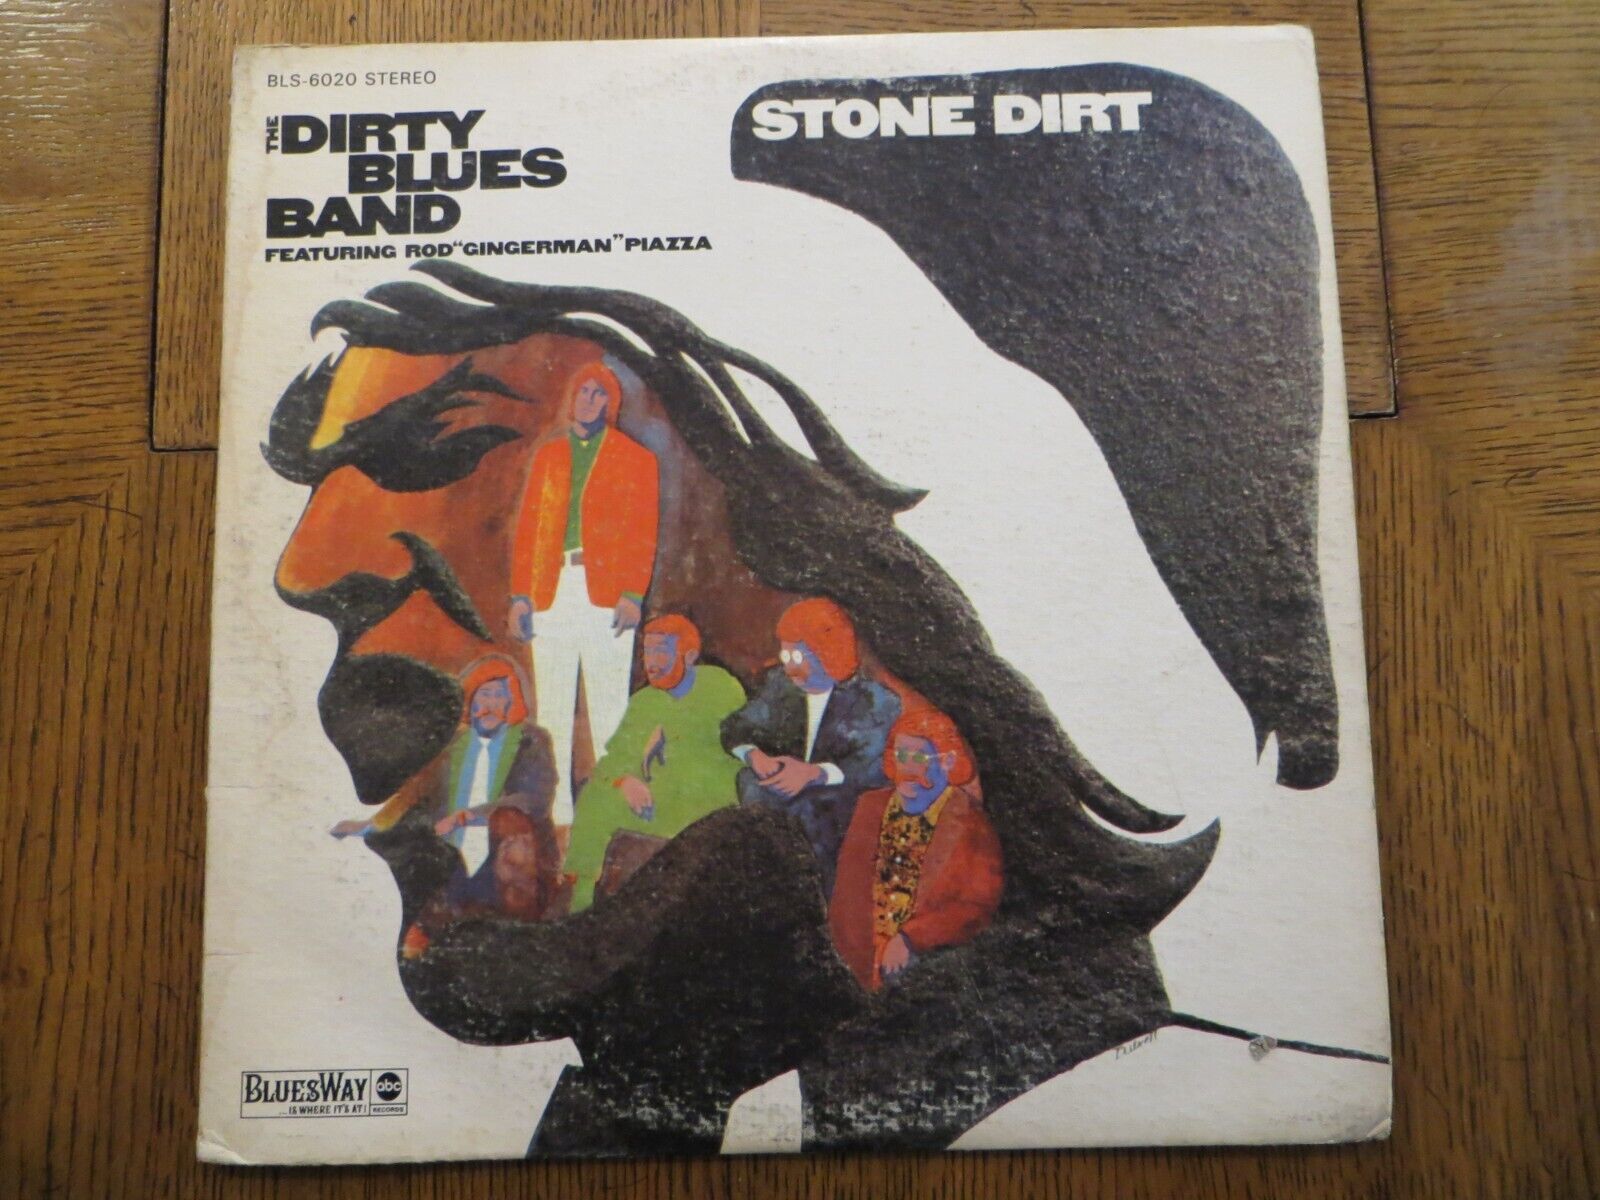 Dirty Blues Band Ft Rod Gingerman Piazza – Stone Dirt - 1968 - Vinyl LP G+/VG